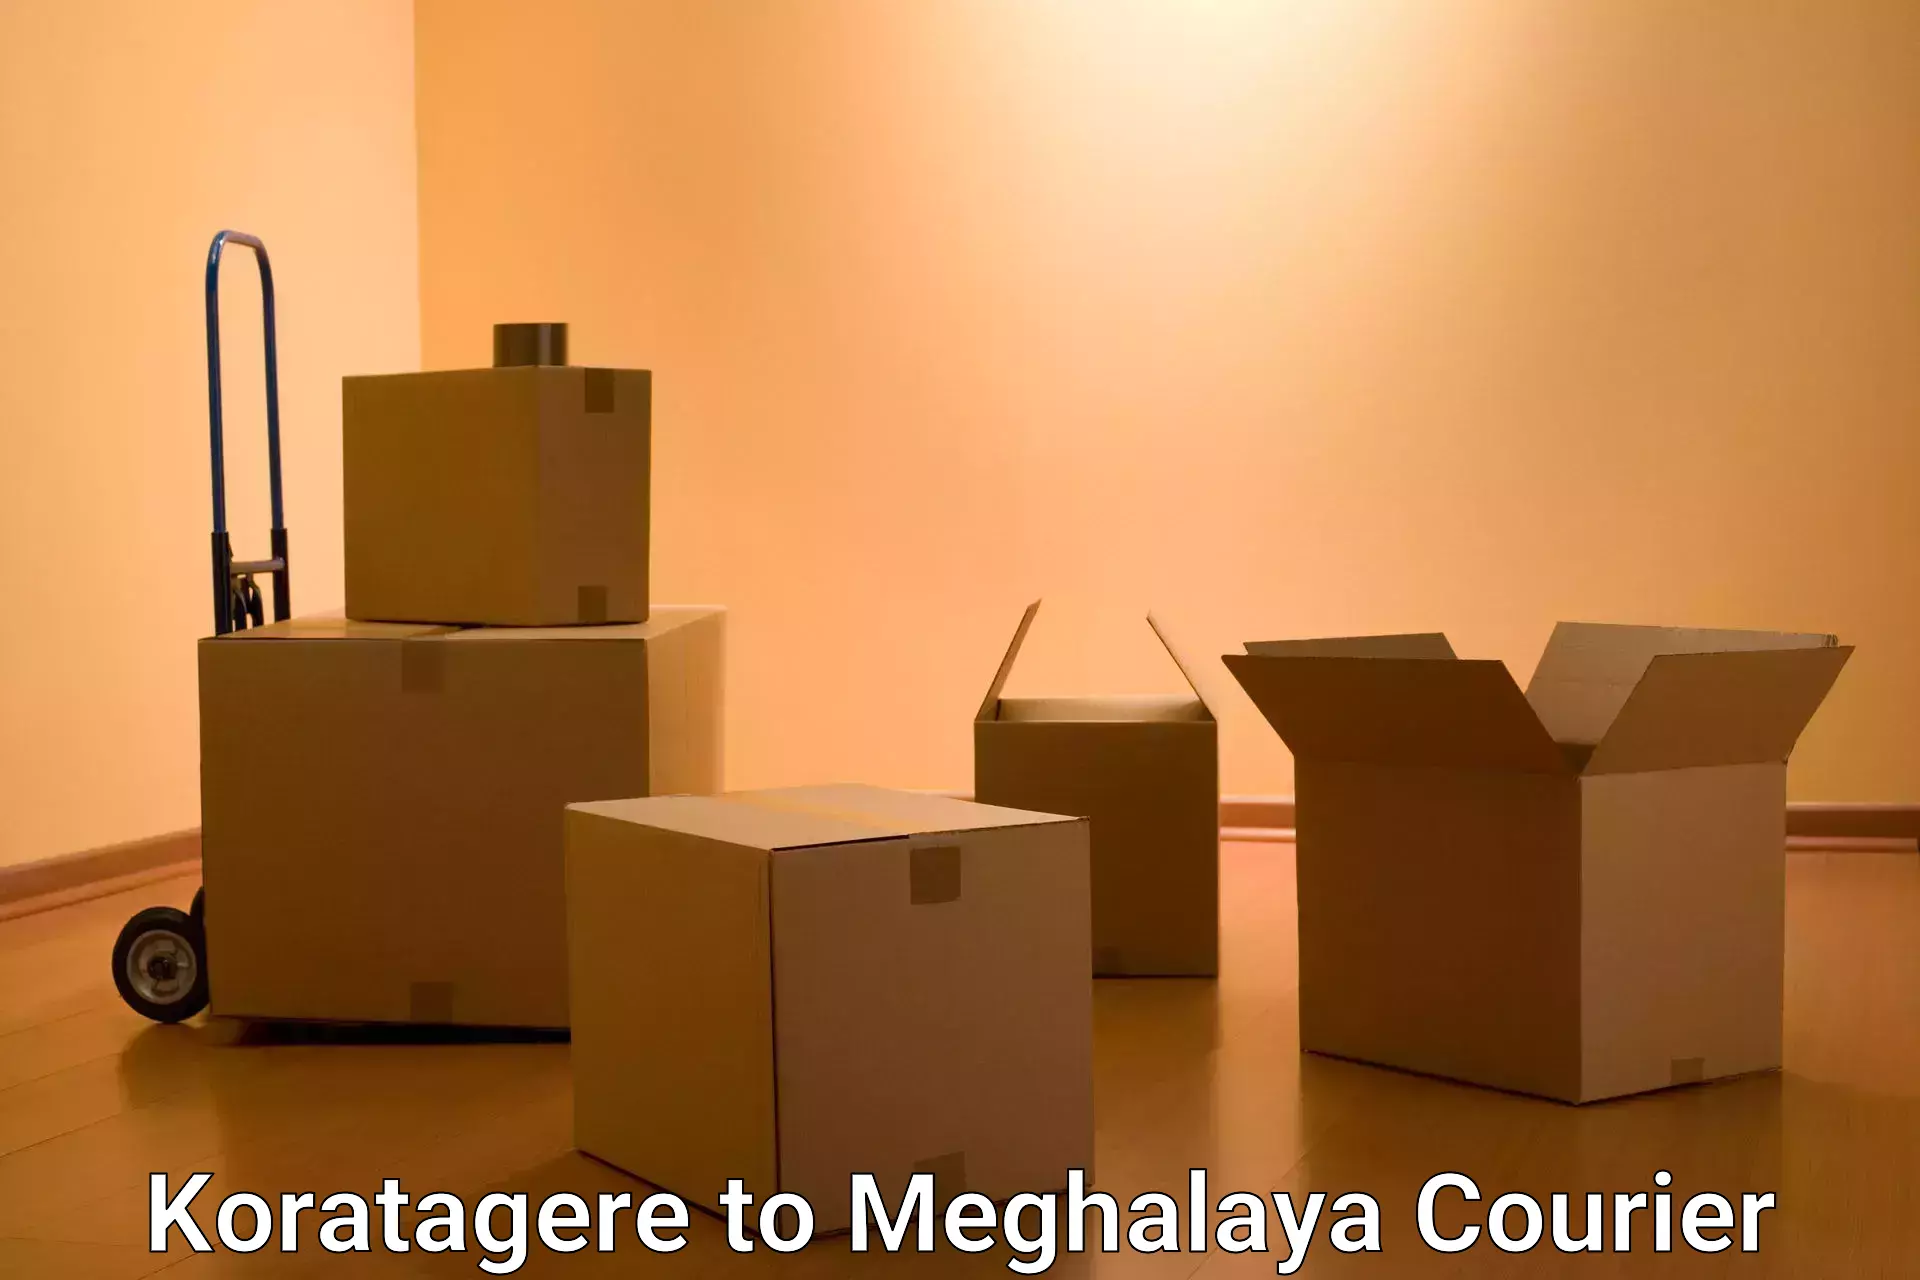 Supply chain efficiency Koratagere to Meghalaya